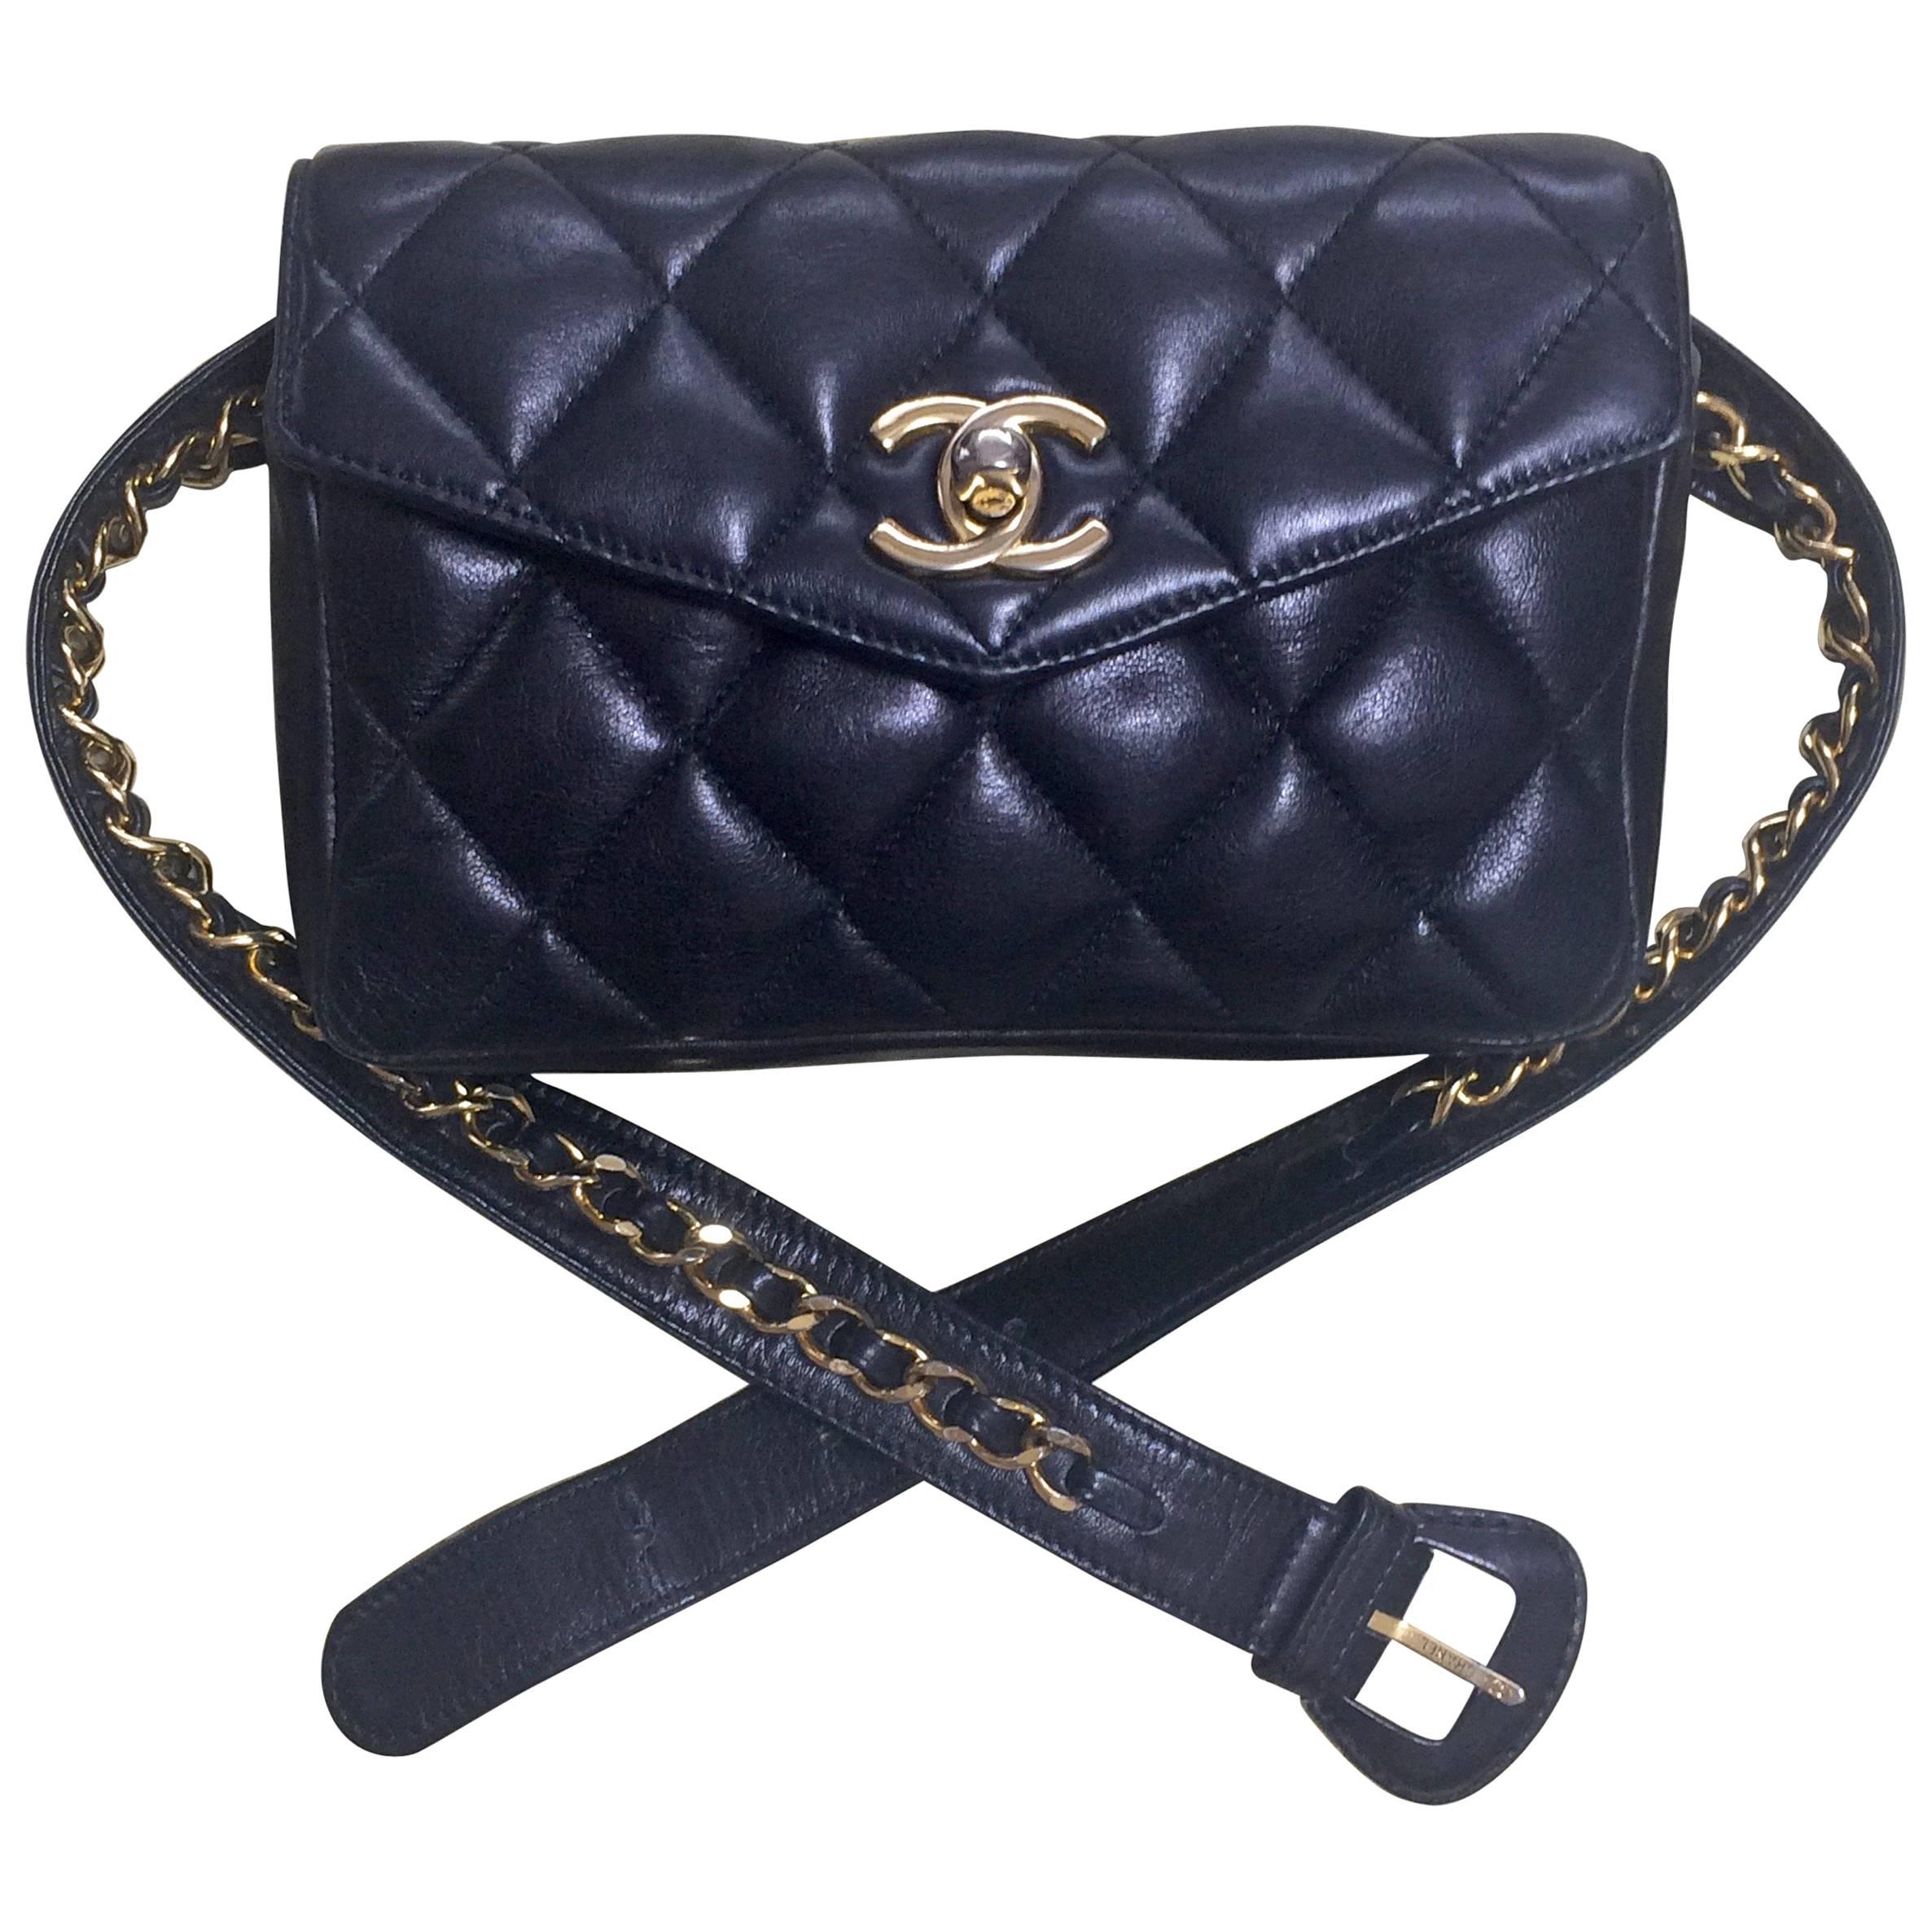 Vintage CHANEL black leather waist bag, fanny pack with golden chain belt & CC.